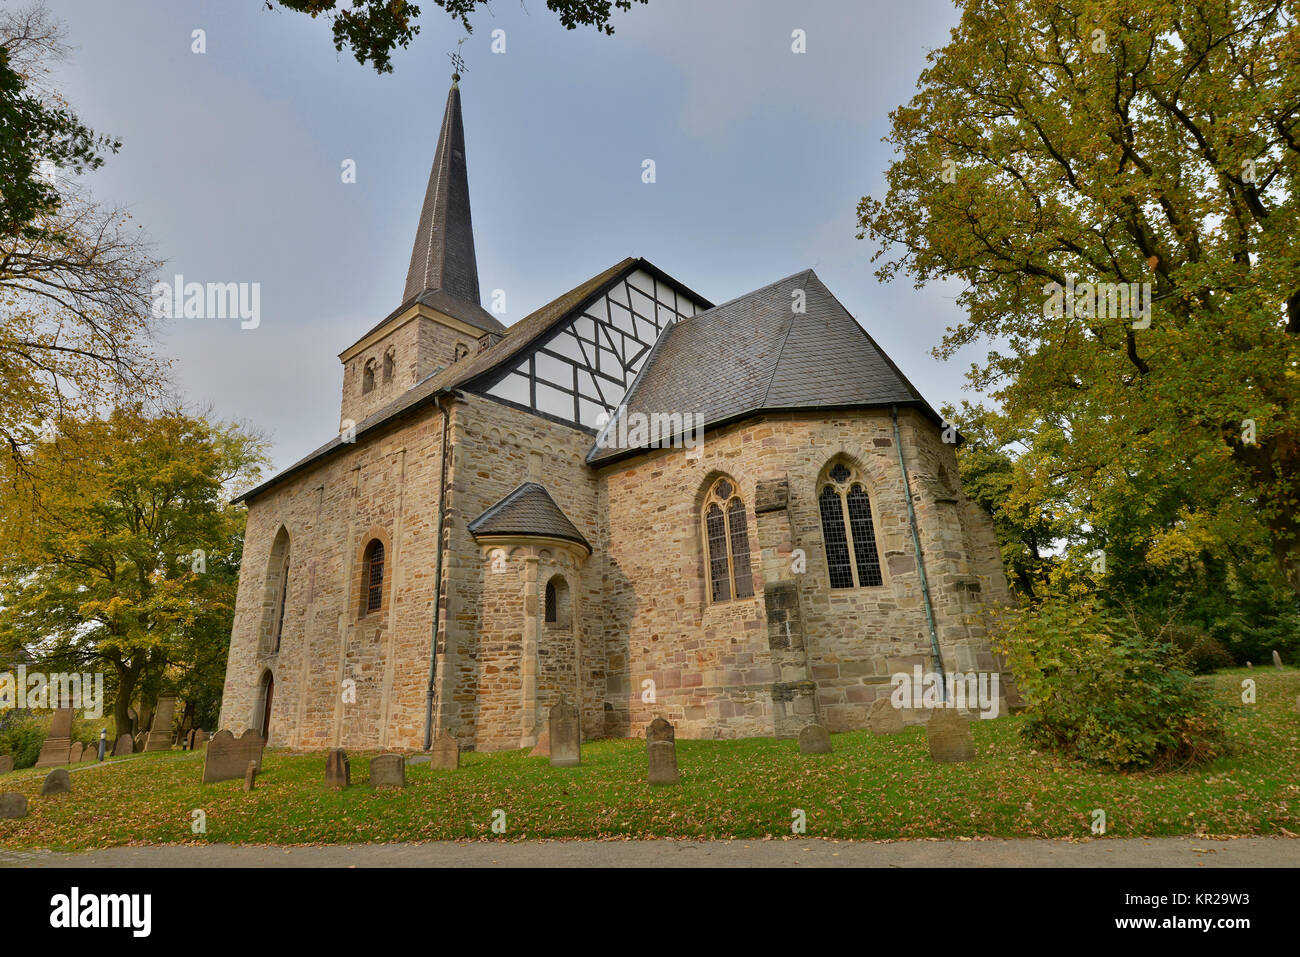 Village church Stiepel, Brockhauser street, Stiepel, Bochum, North Rhine-Westphalia, Germany, Dorfkirche Stiepel, Brockhauser Strasse, Nordrhein-Westf Stock Photo